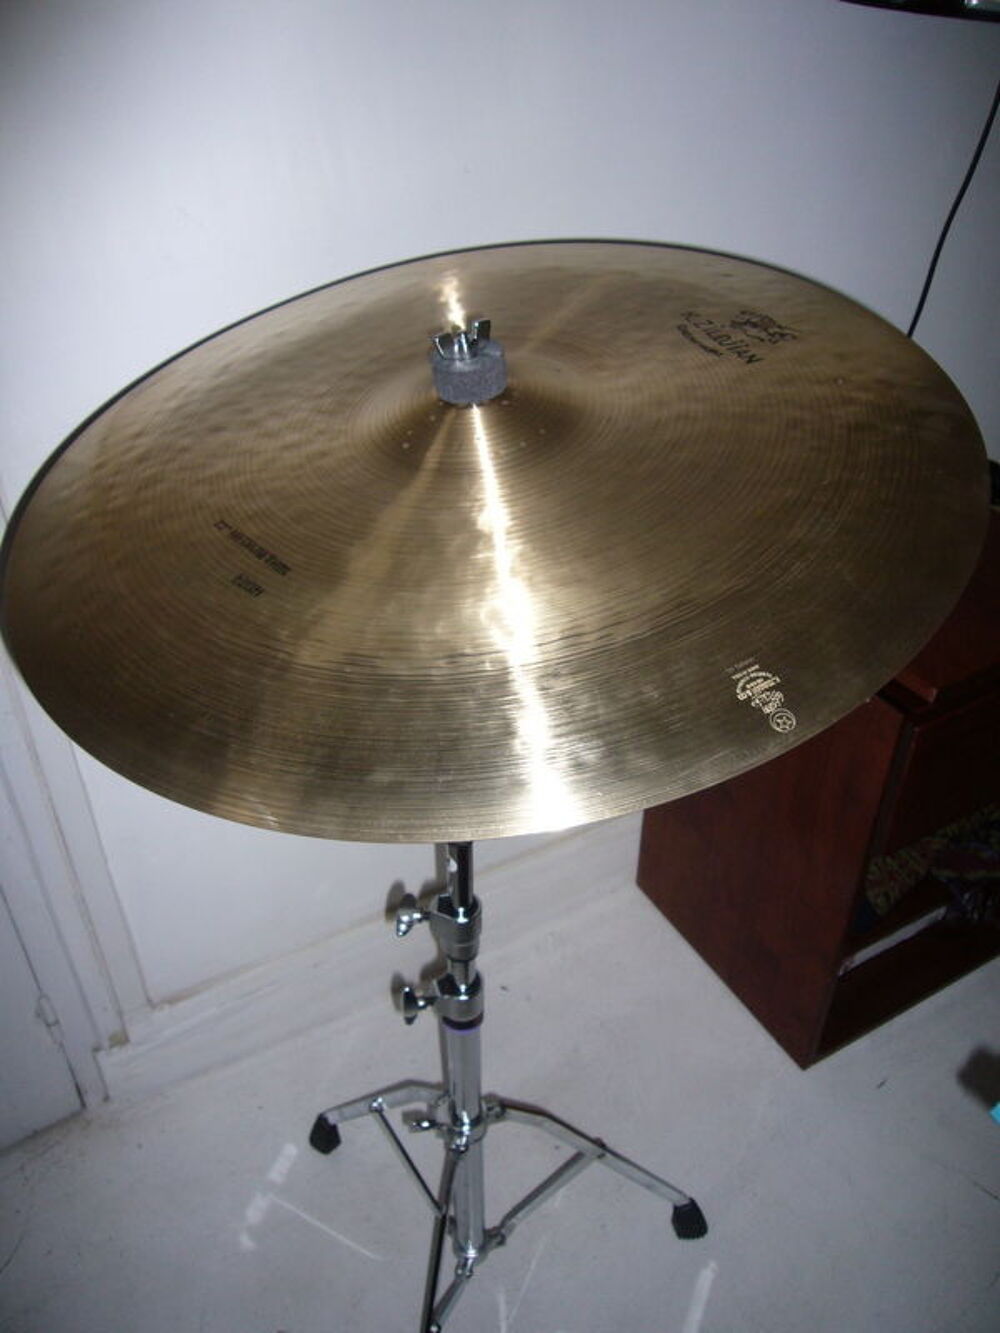 Cymbale k constantinople medium thin high 22&quot; Instruments de musique